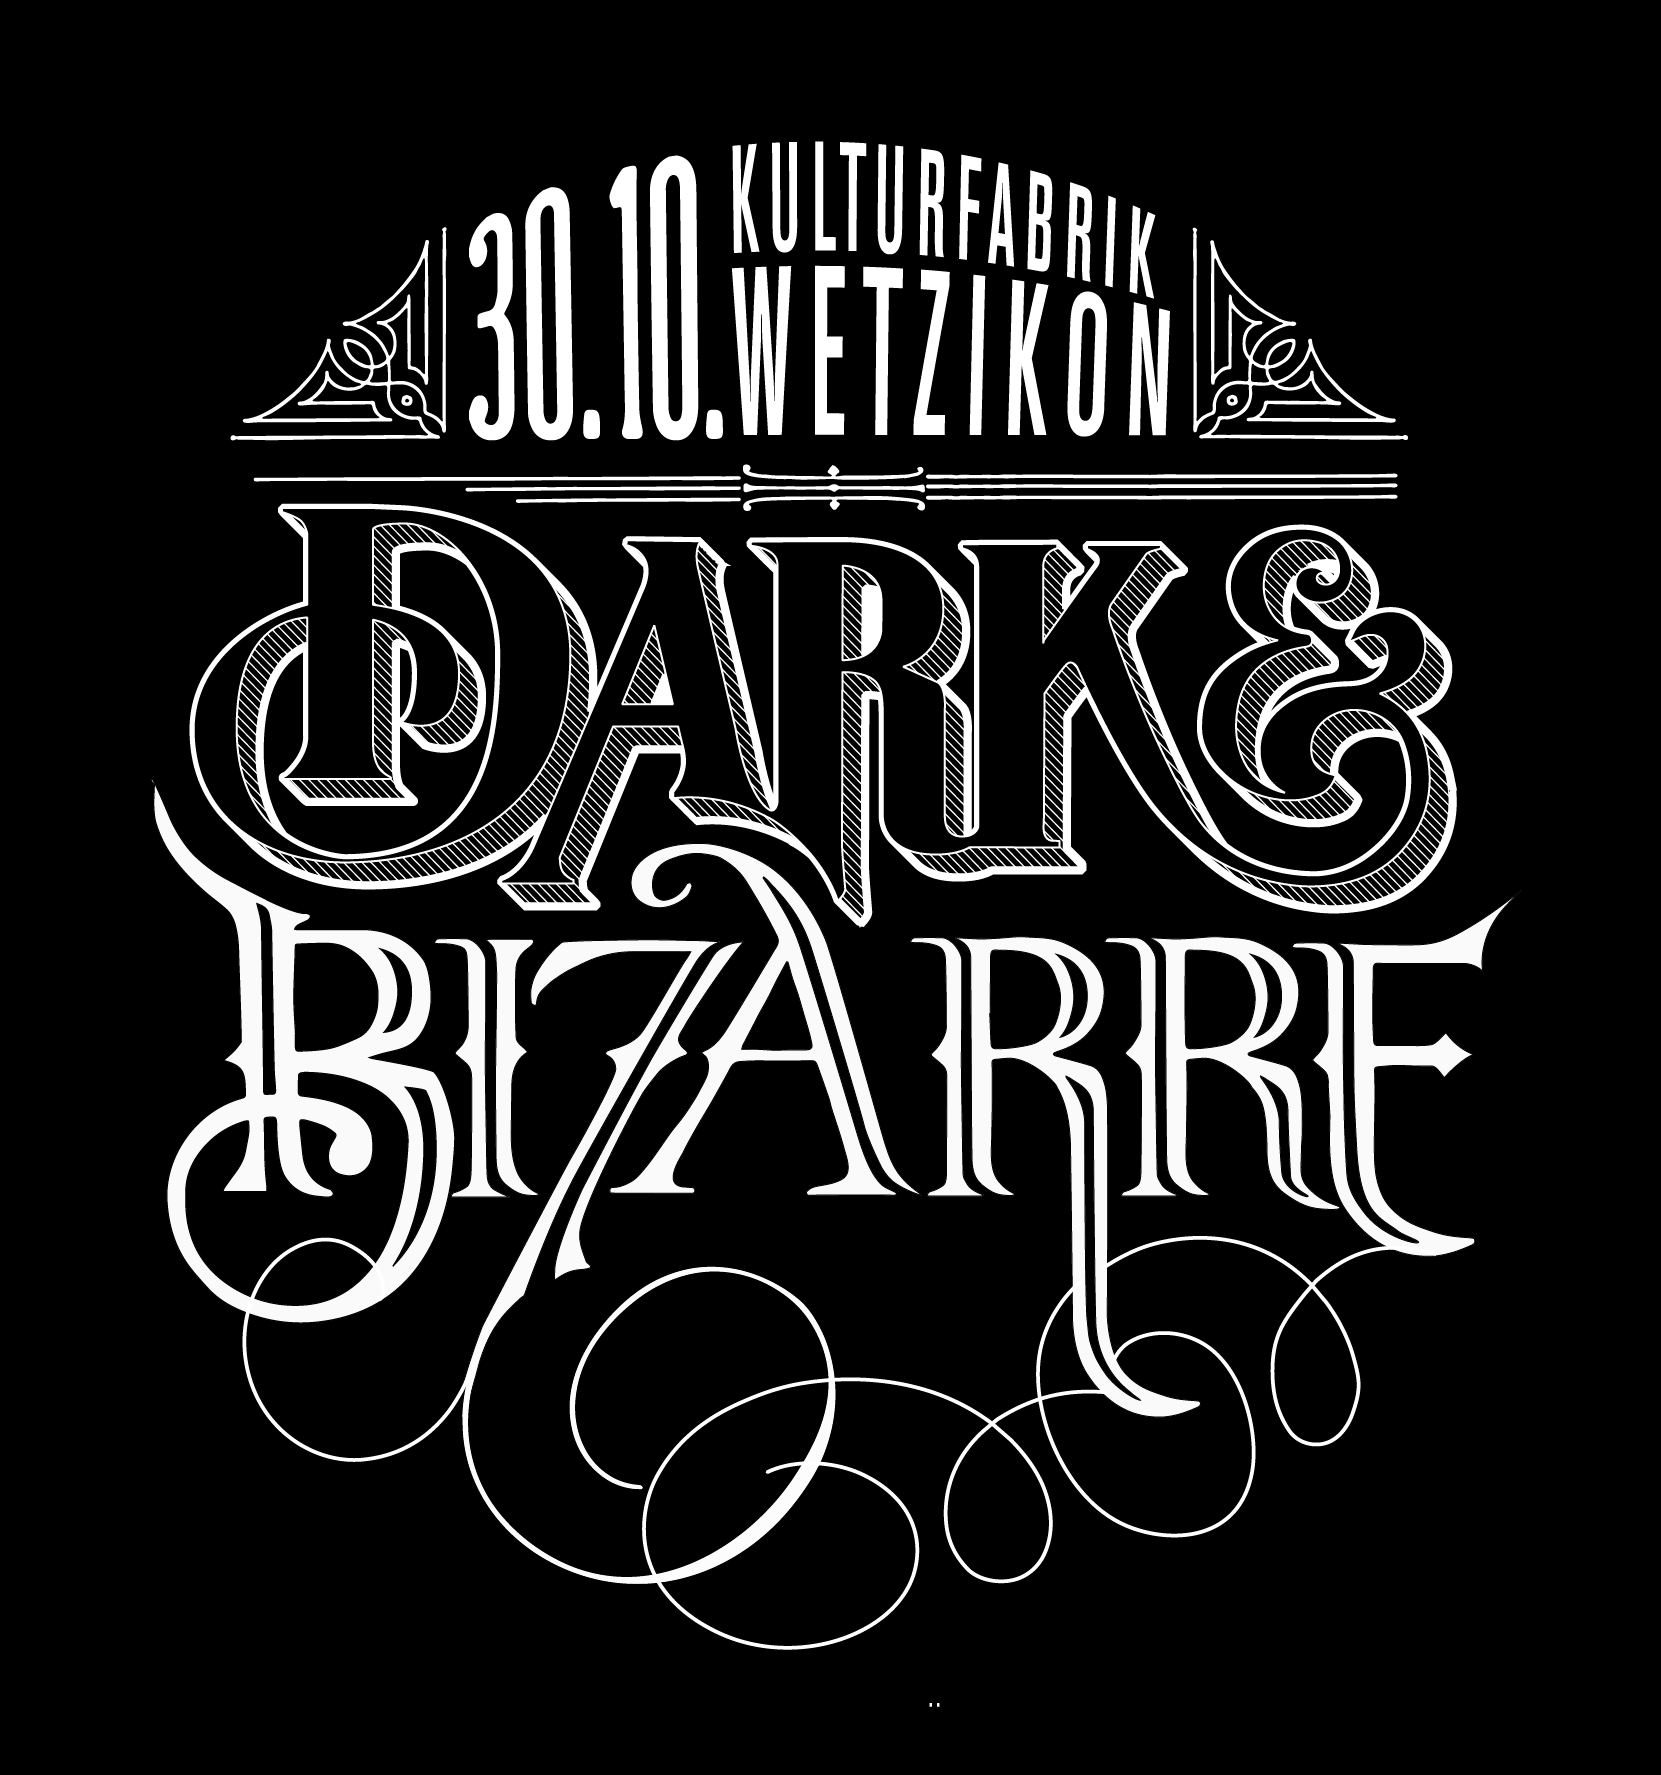 Dark & Bizarre